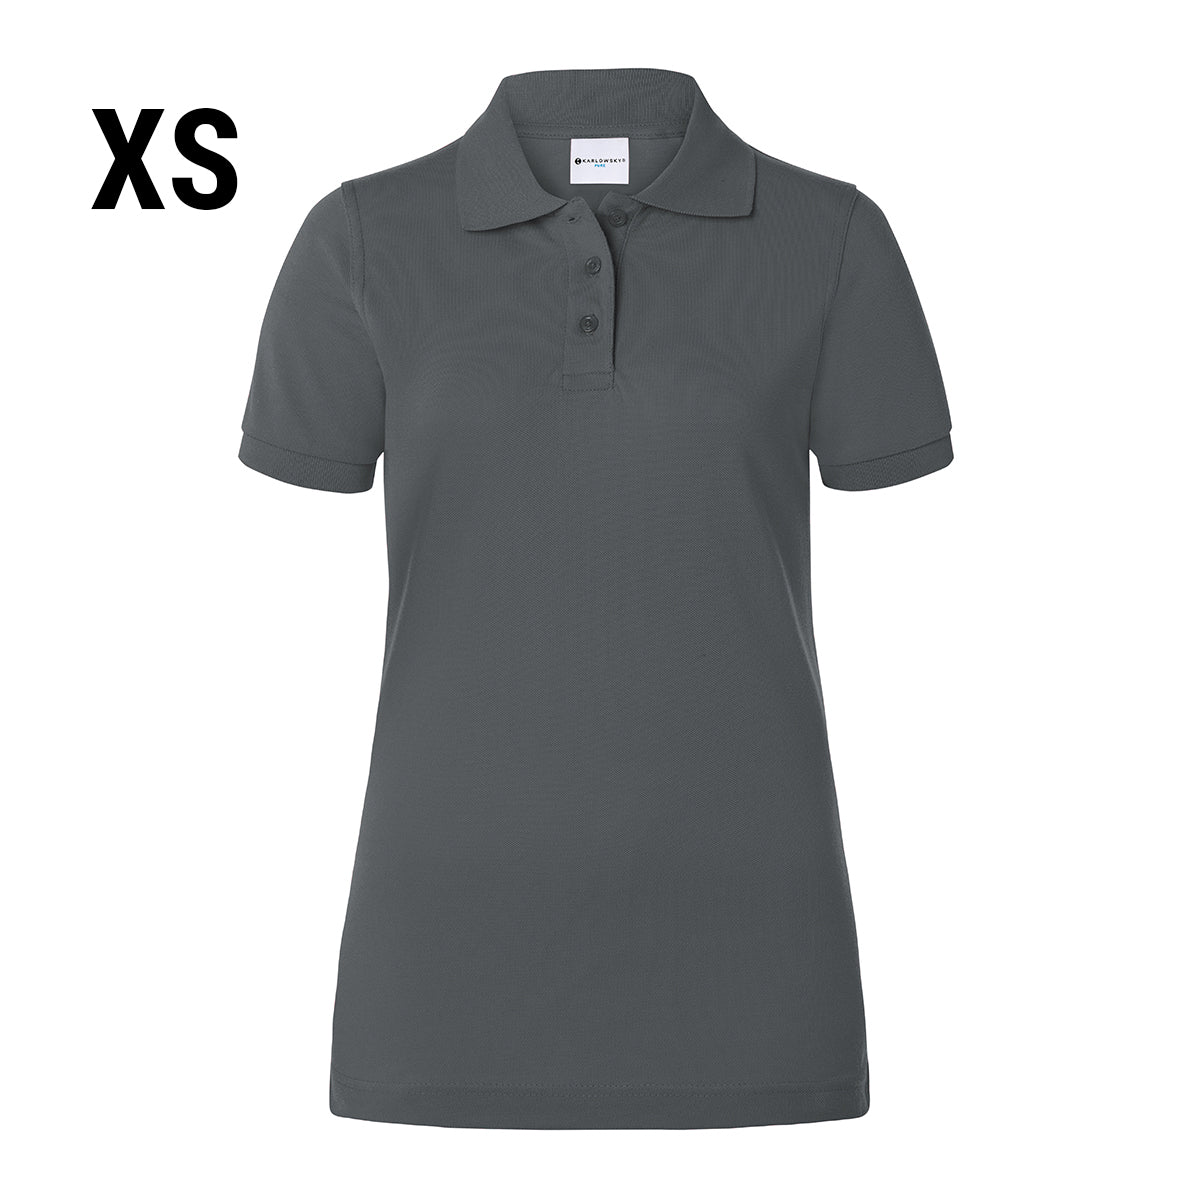 Karlowsky - Arbejdsbeklædning Basic Poloshirt til damer - Antracit - Størrelse: XS